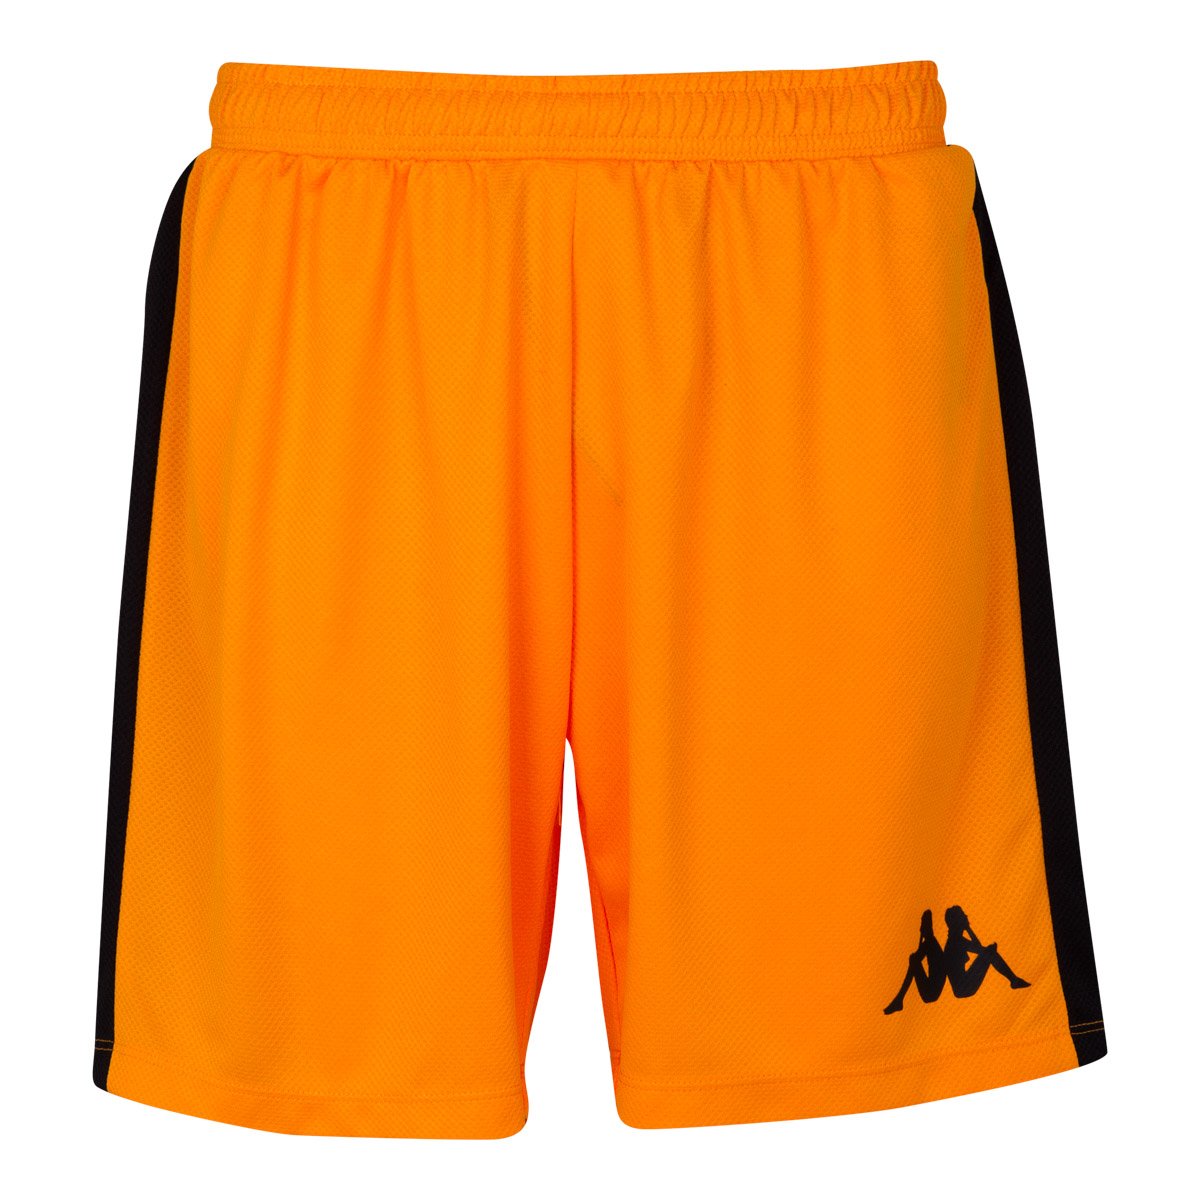 Pantalones cortes Basket Calusa Naranja Mujer - Imagen 1